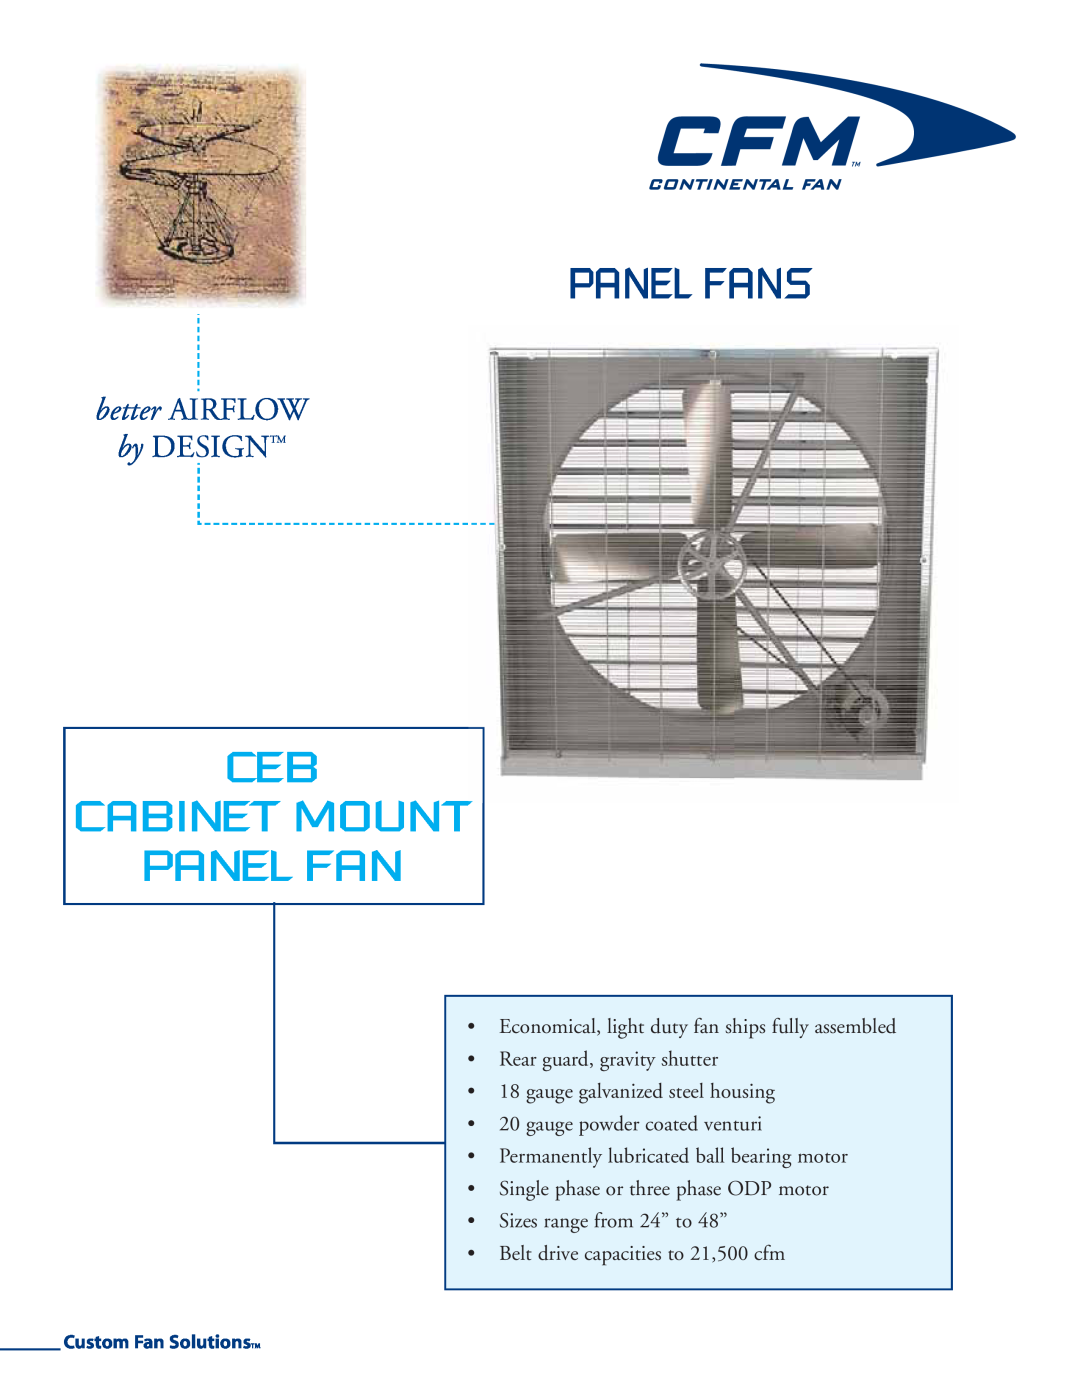 CFM CEB-48 manual Panel Fans, Ceb Cabinet Mount Panel Fan, better AIRFLOW, by DESIGNTM, gauge powder coated venturi 